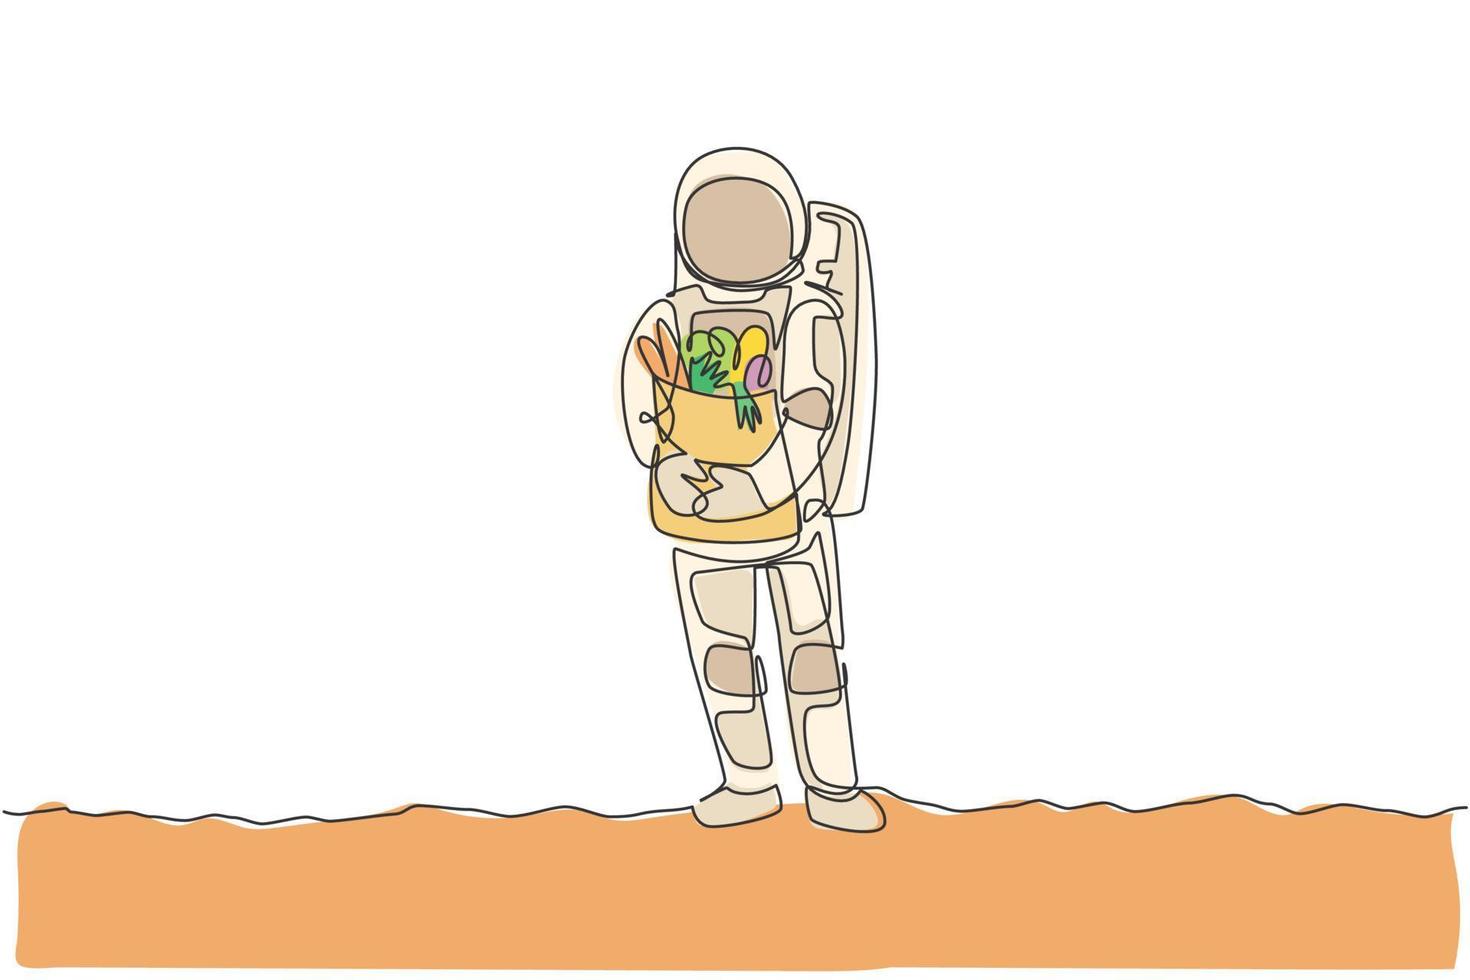 en enda radritning av astronaut ta med papperspåse full av matvaror på bröstet i månytan i månytan vektorillustration. yttre rymden jordbruk koncept. modern kontinuerlig linje rita design vektor